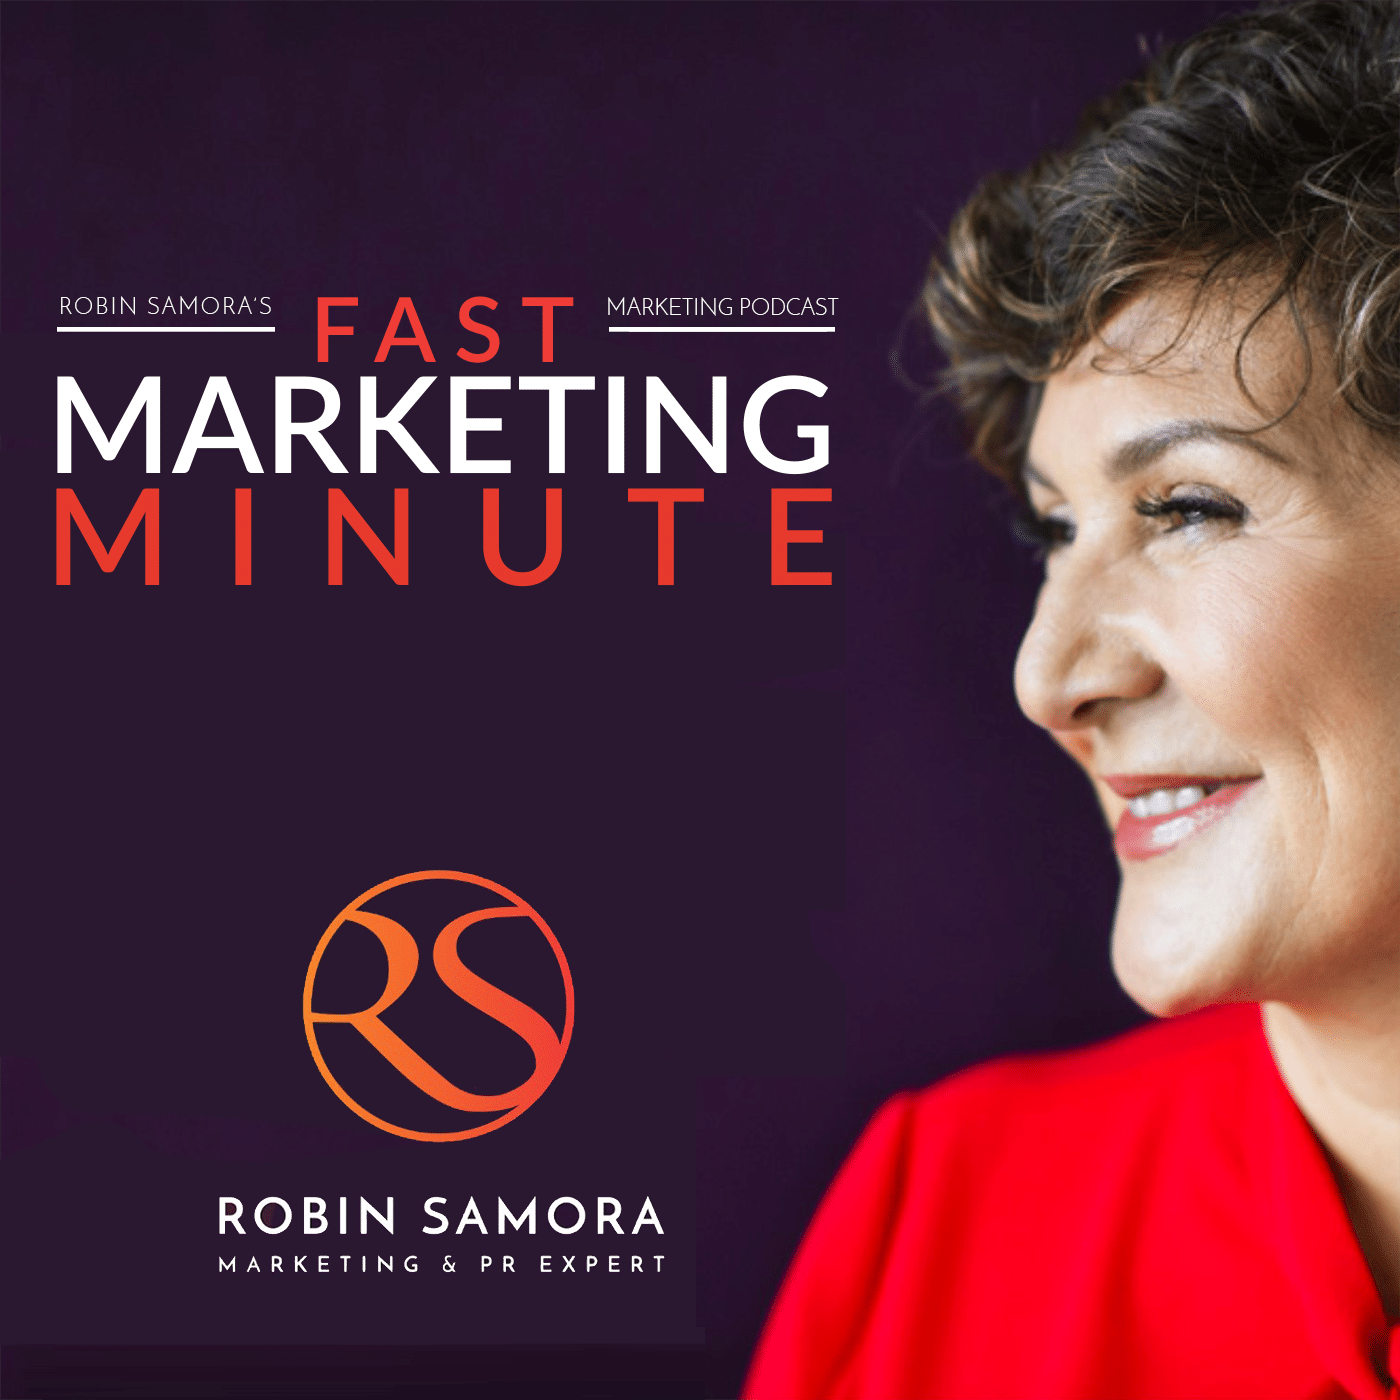 , Marketing and PR Expert Robin Samora&#8217;s Fast Marketing Minute featured on Alexa, Fast Marketing Minute